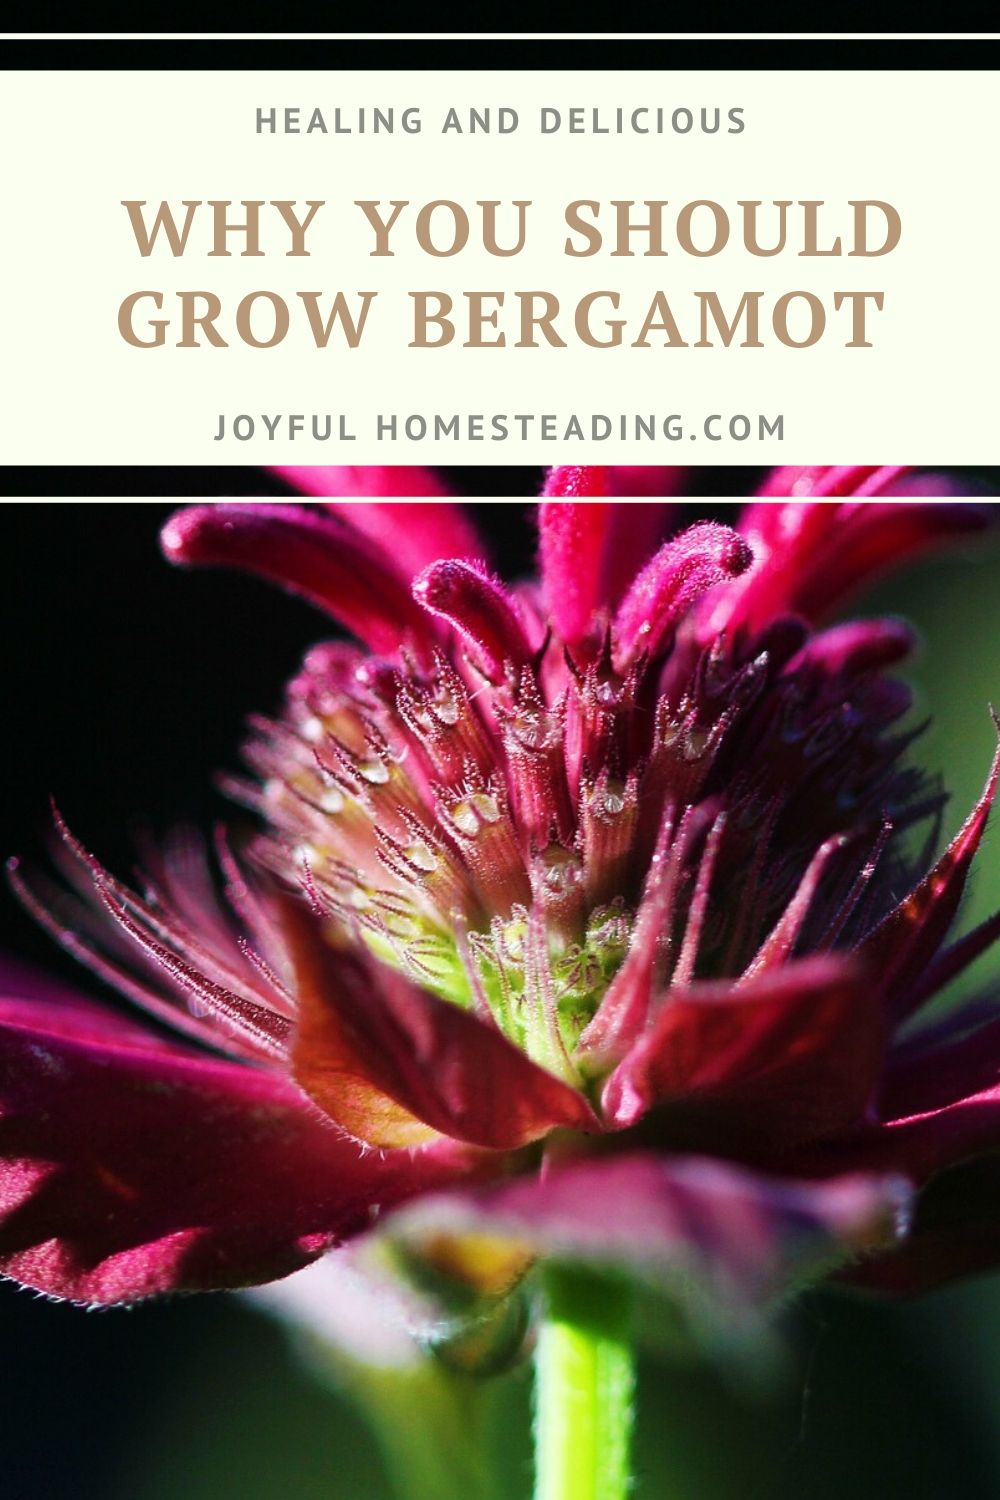 The Herb Bergamot